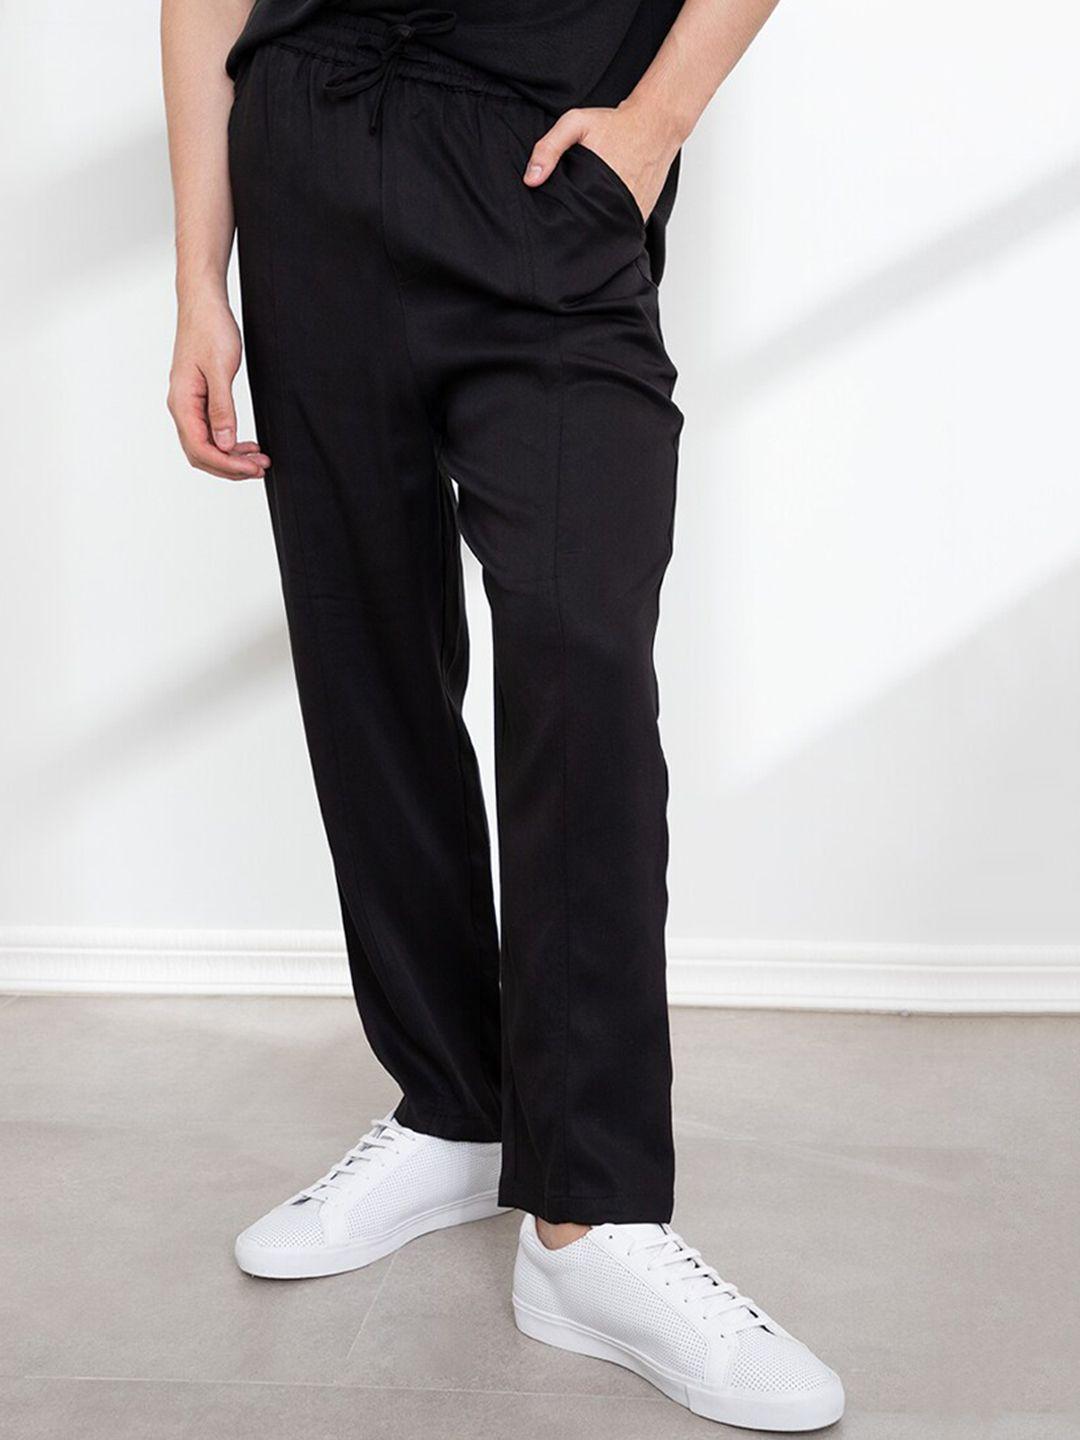 origin-by-zalora-men-black-solid-regular-trousers